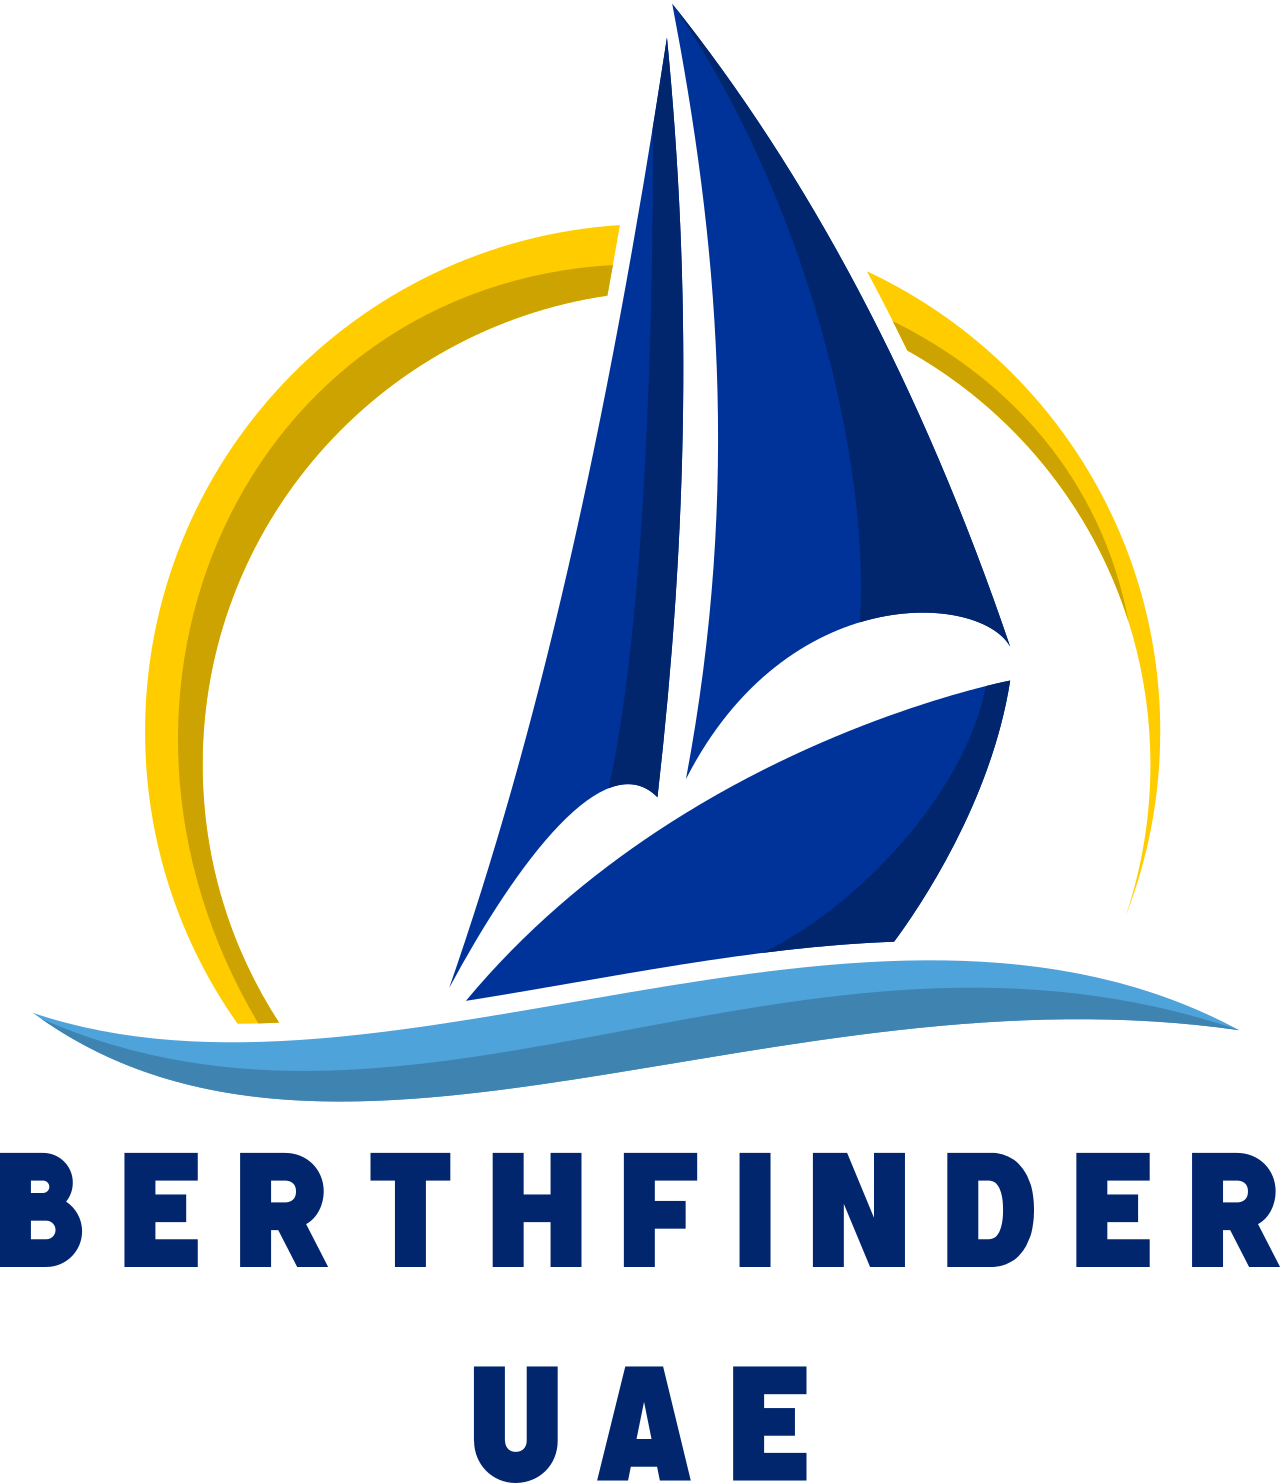 Berthfinder
UAE's logo